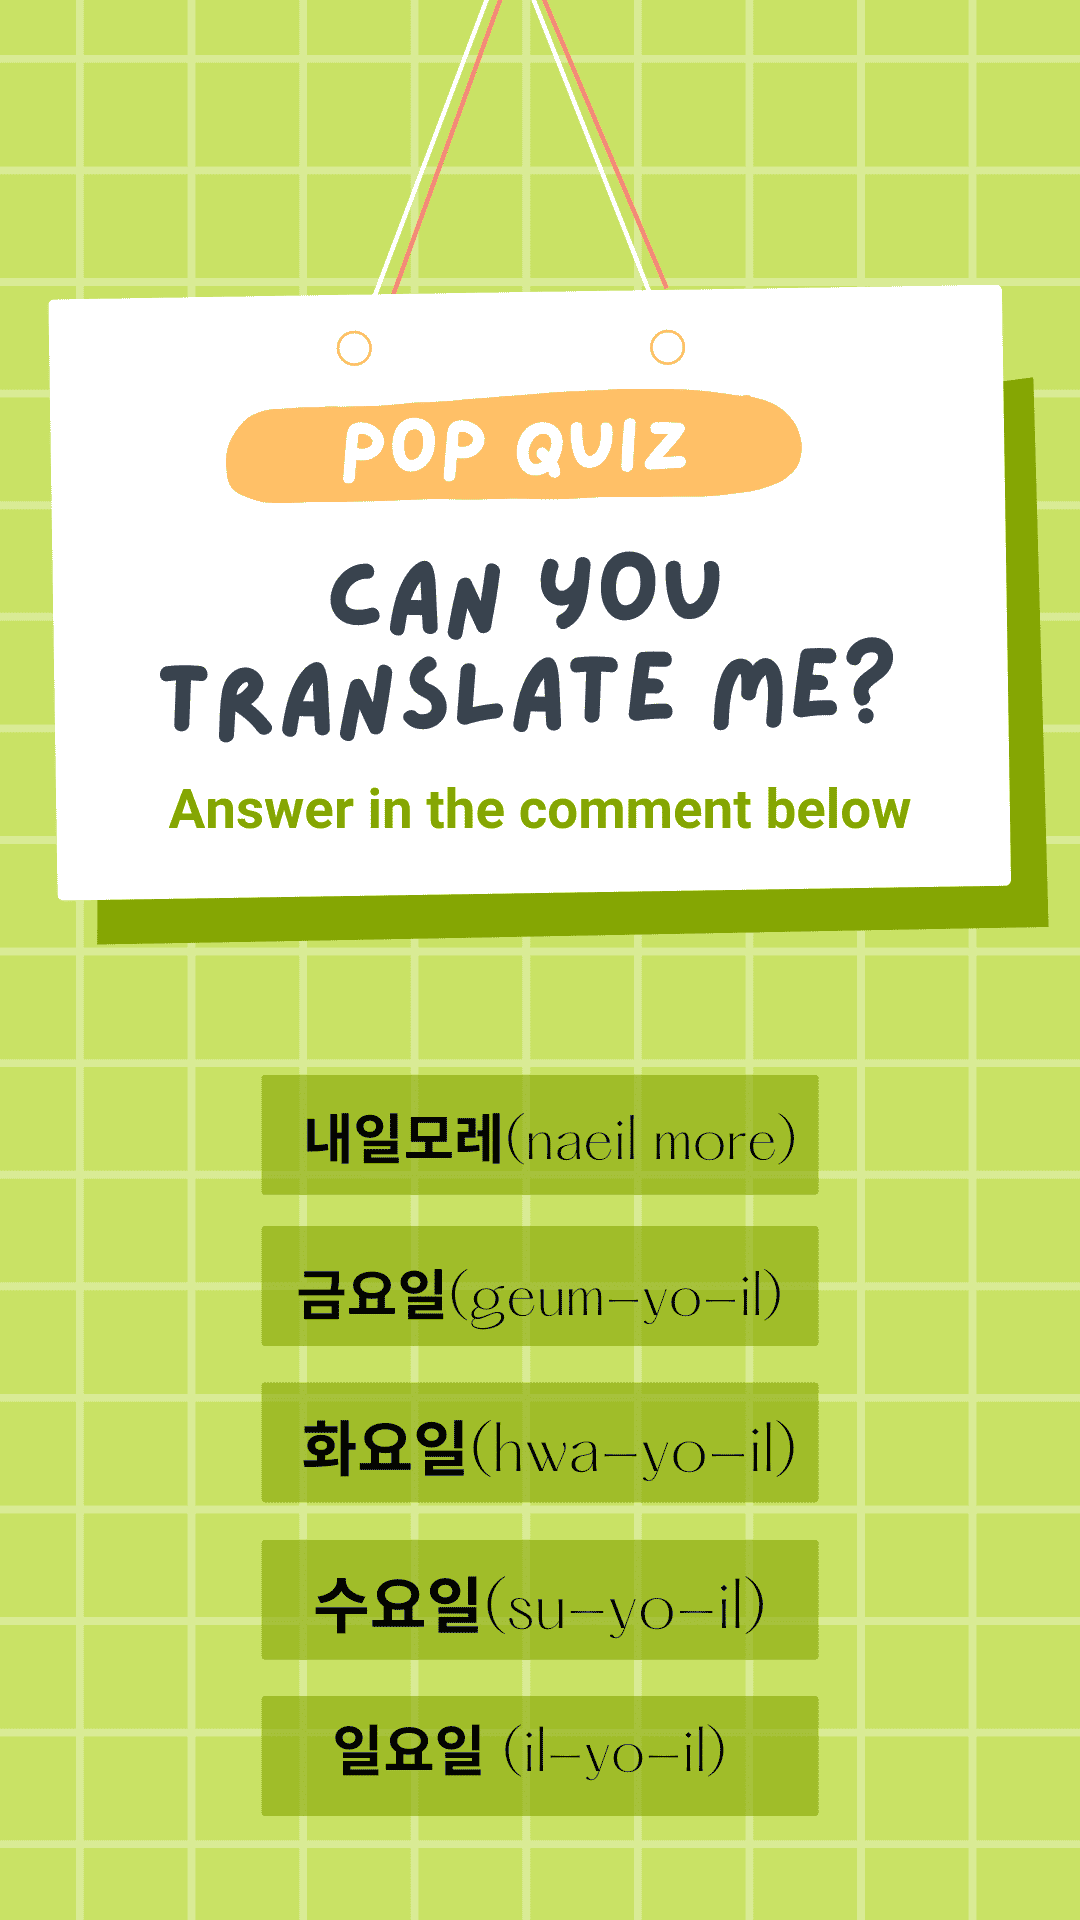 Korean vocabulary quiz on days of the week in Korean language